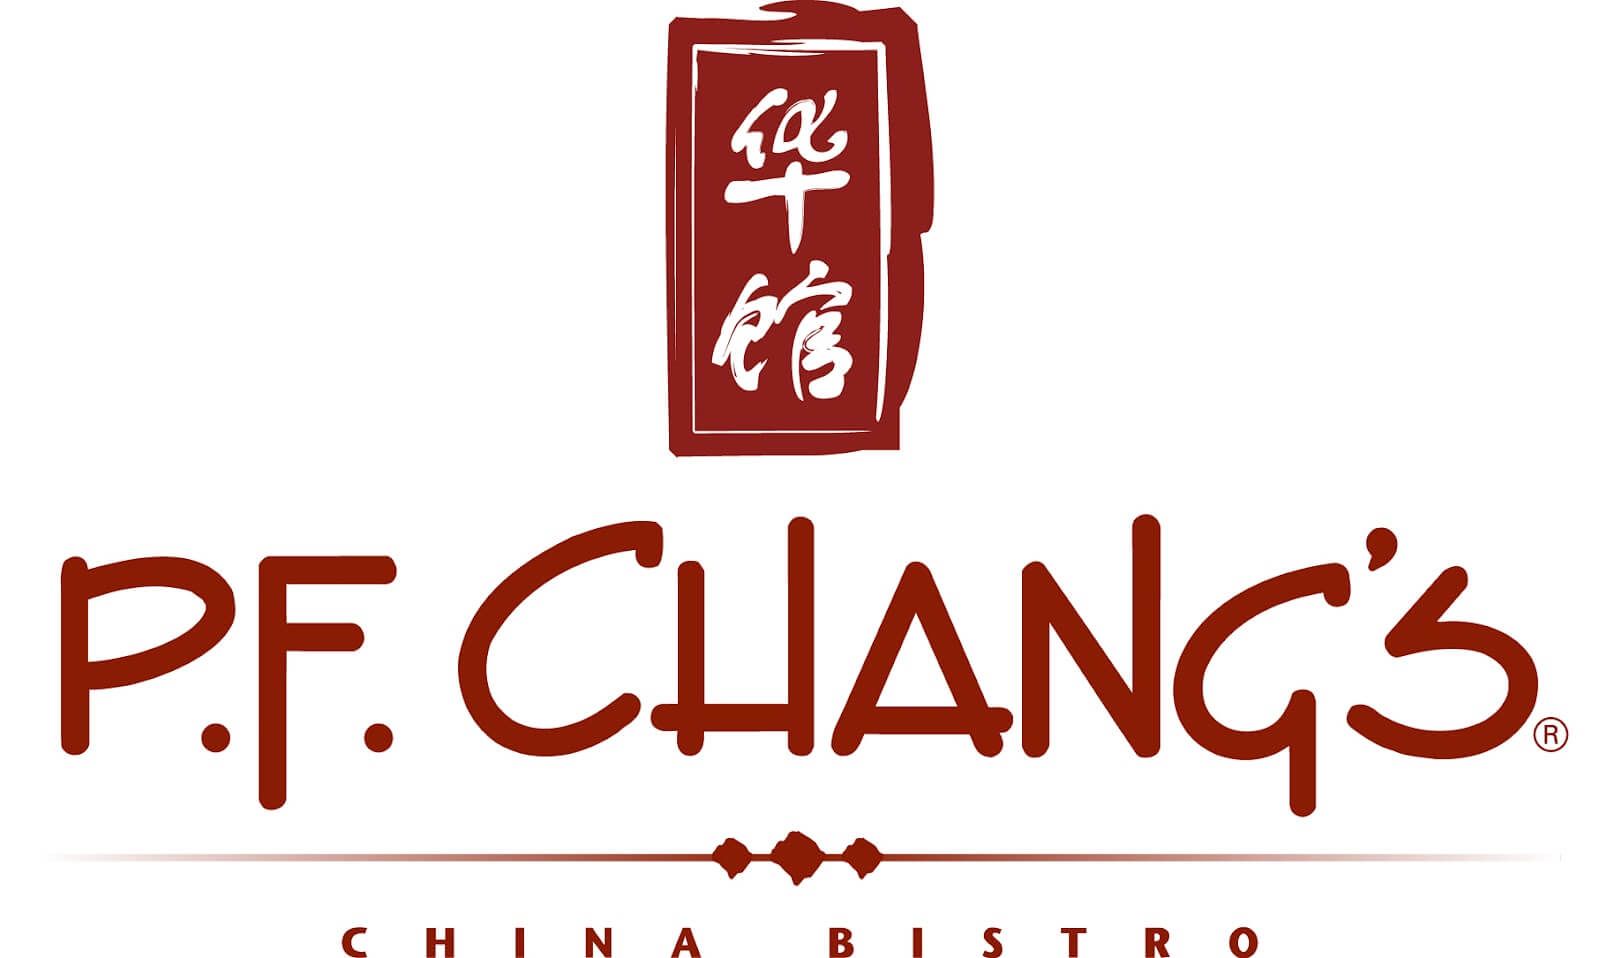 PF Chang's Logo